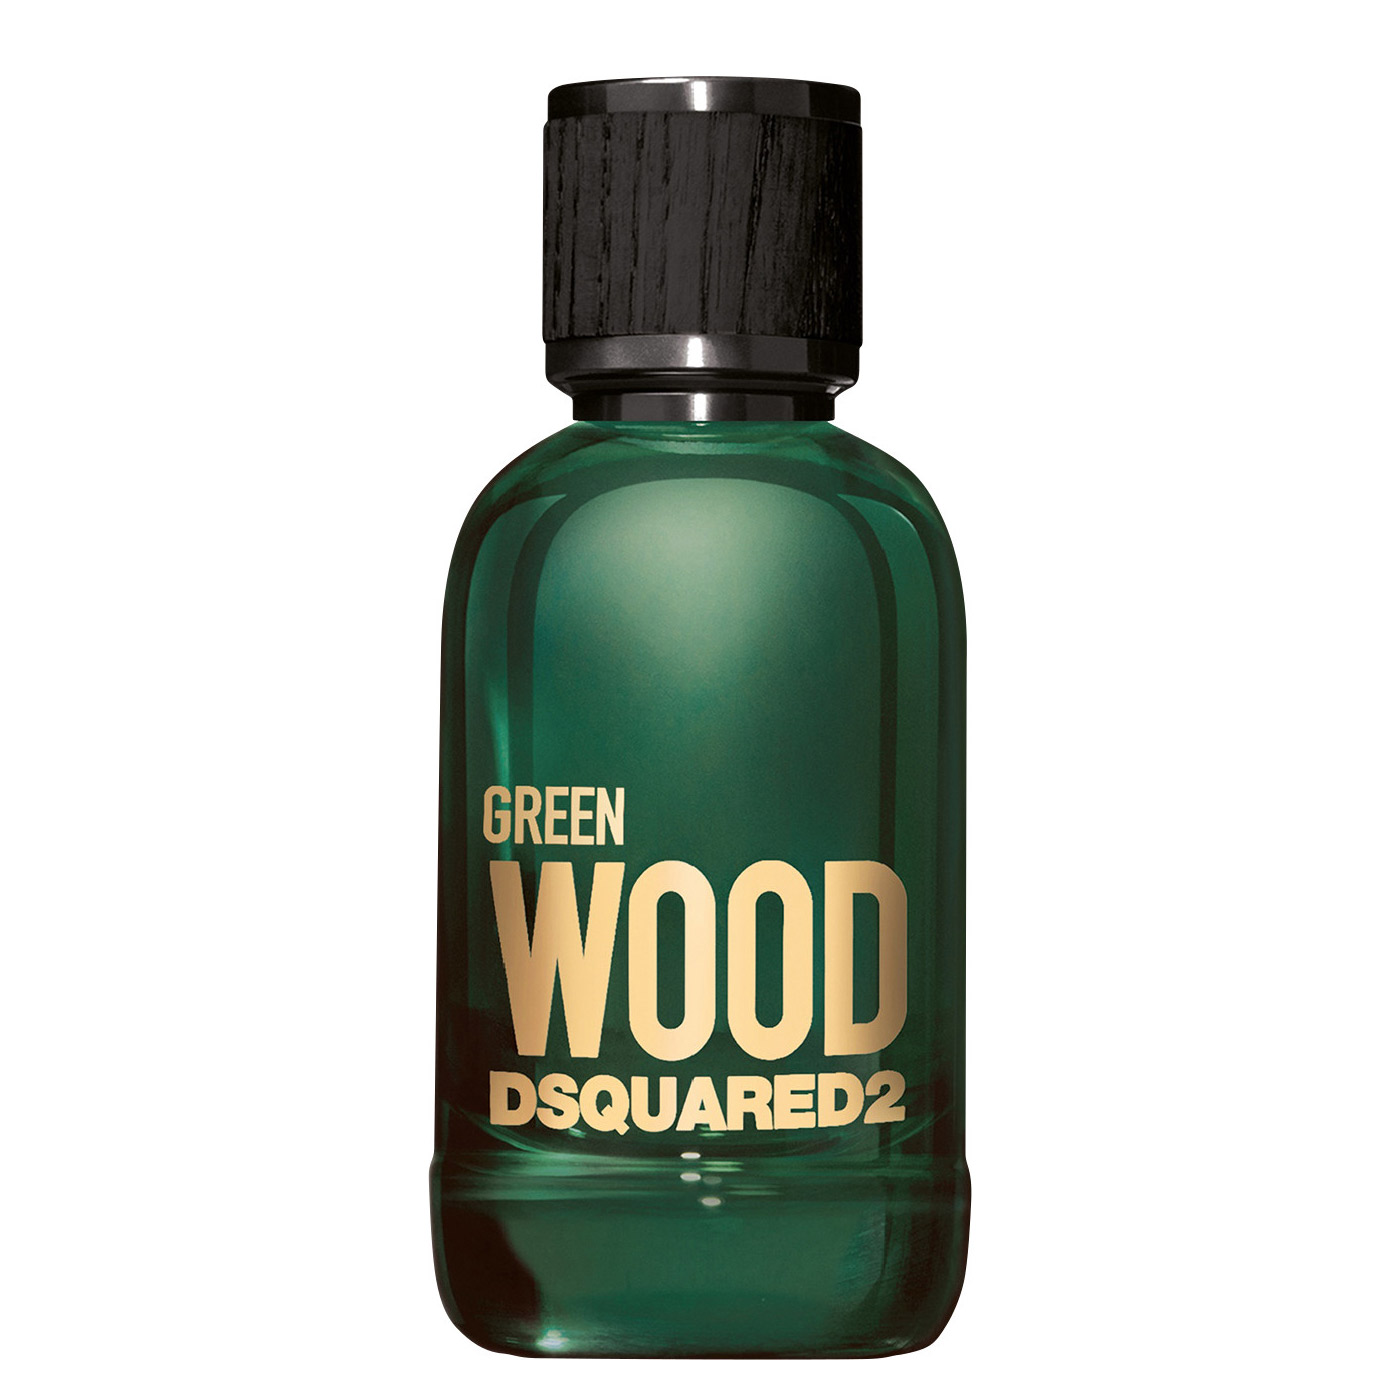 Green-Wood-Dsquared2